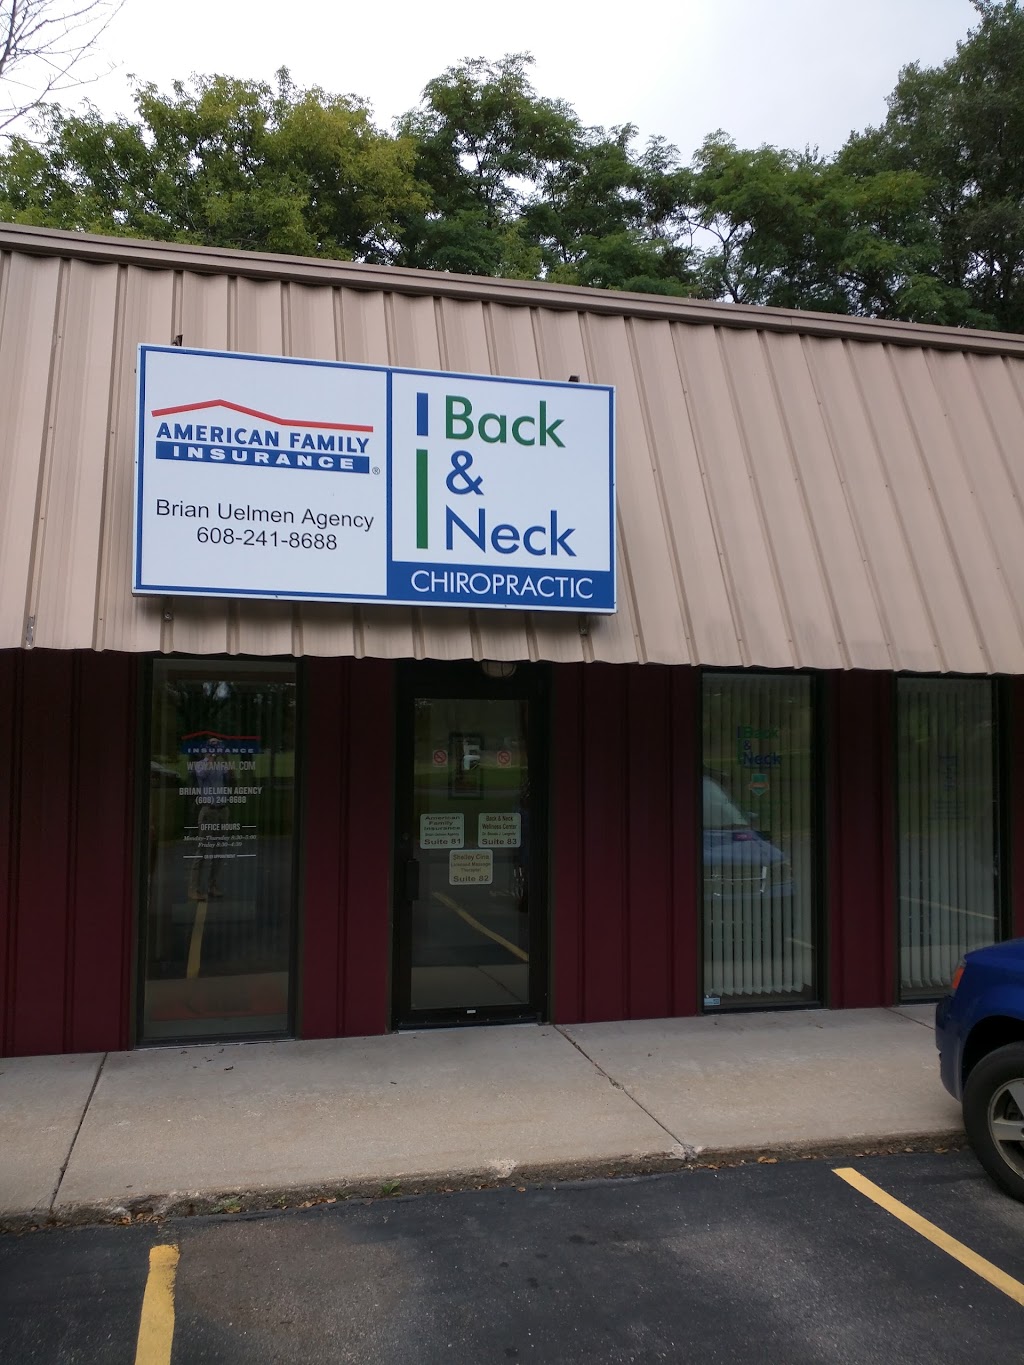 Back & Neck Wellness Center | 4222 Milwaukee St, Madison, WI 53714 | Phone: (608) 222-4244